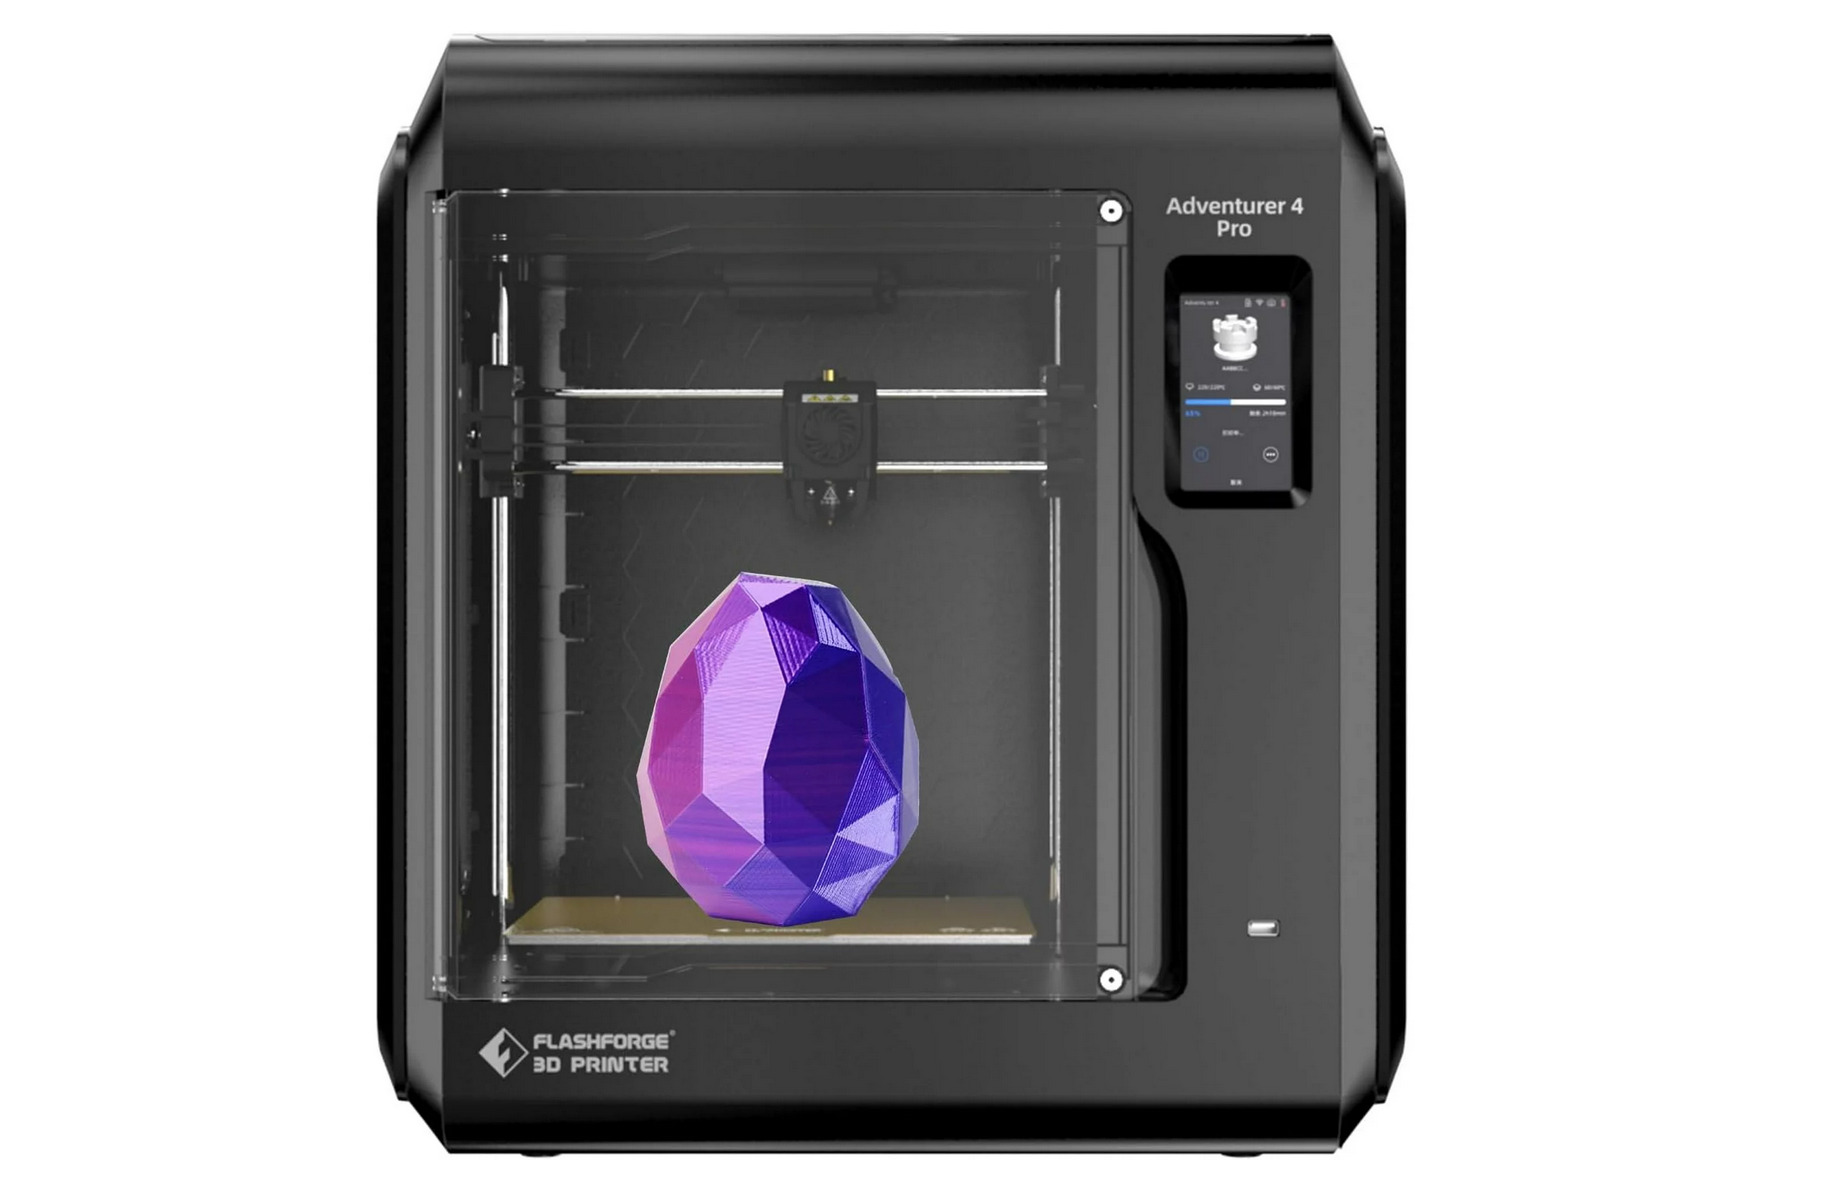 Flashforge 3D Printer Adventurer 4 Pro